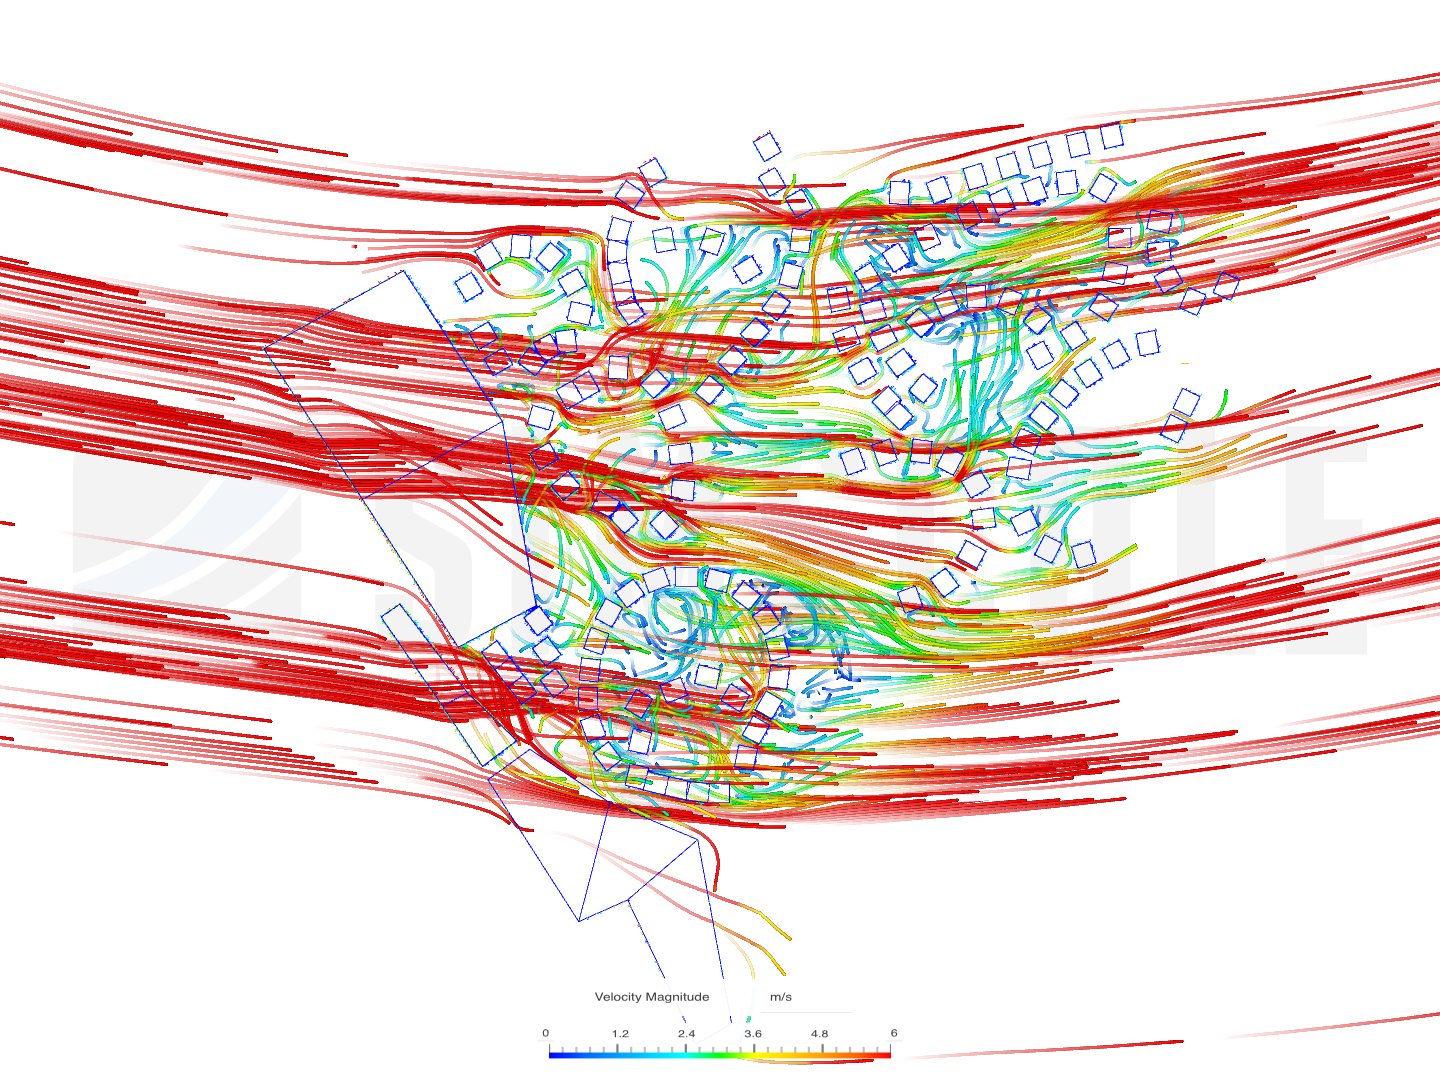 wind simulation design 1 image